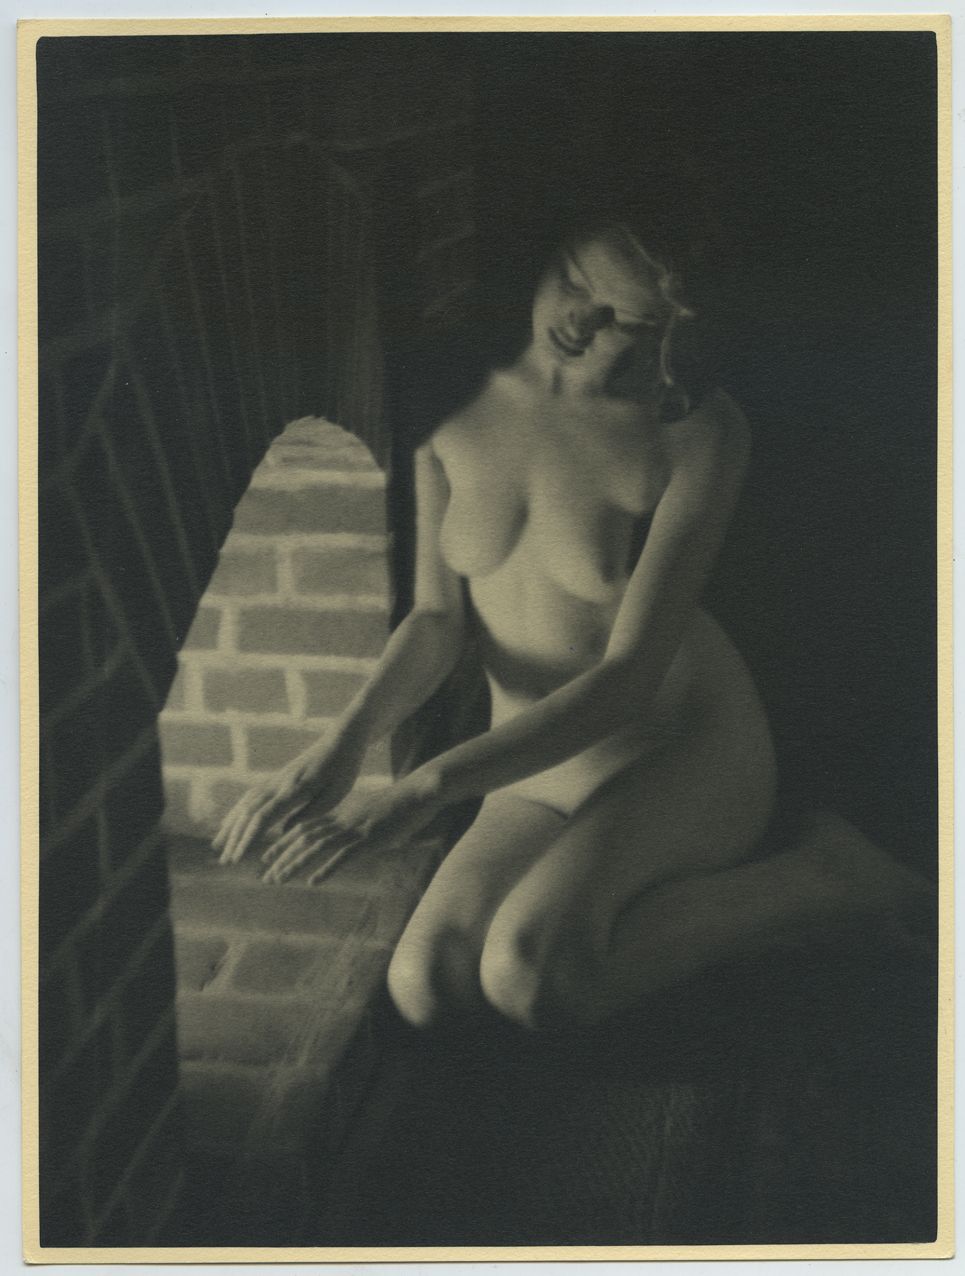 Null Heinz von PERCKHAMMER（1895-1965 年）。壁炉边的裸女》，约 1950 年。银质版画，23.4 x 17.4 厘米。背面有&hellip;